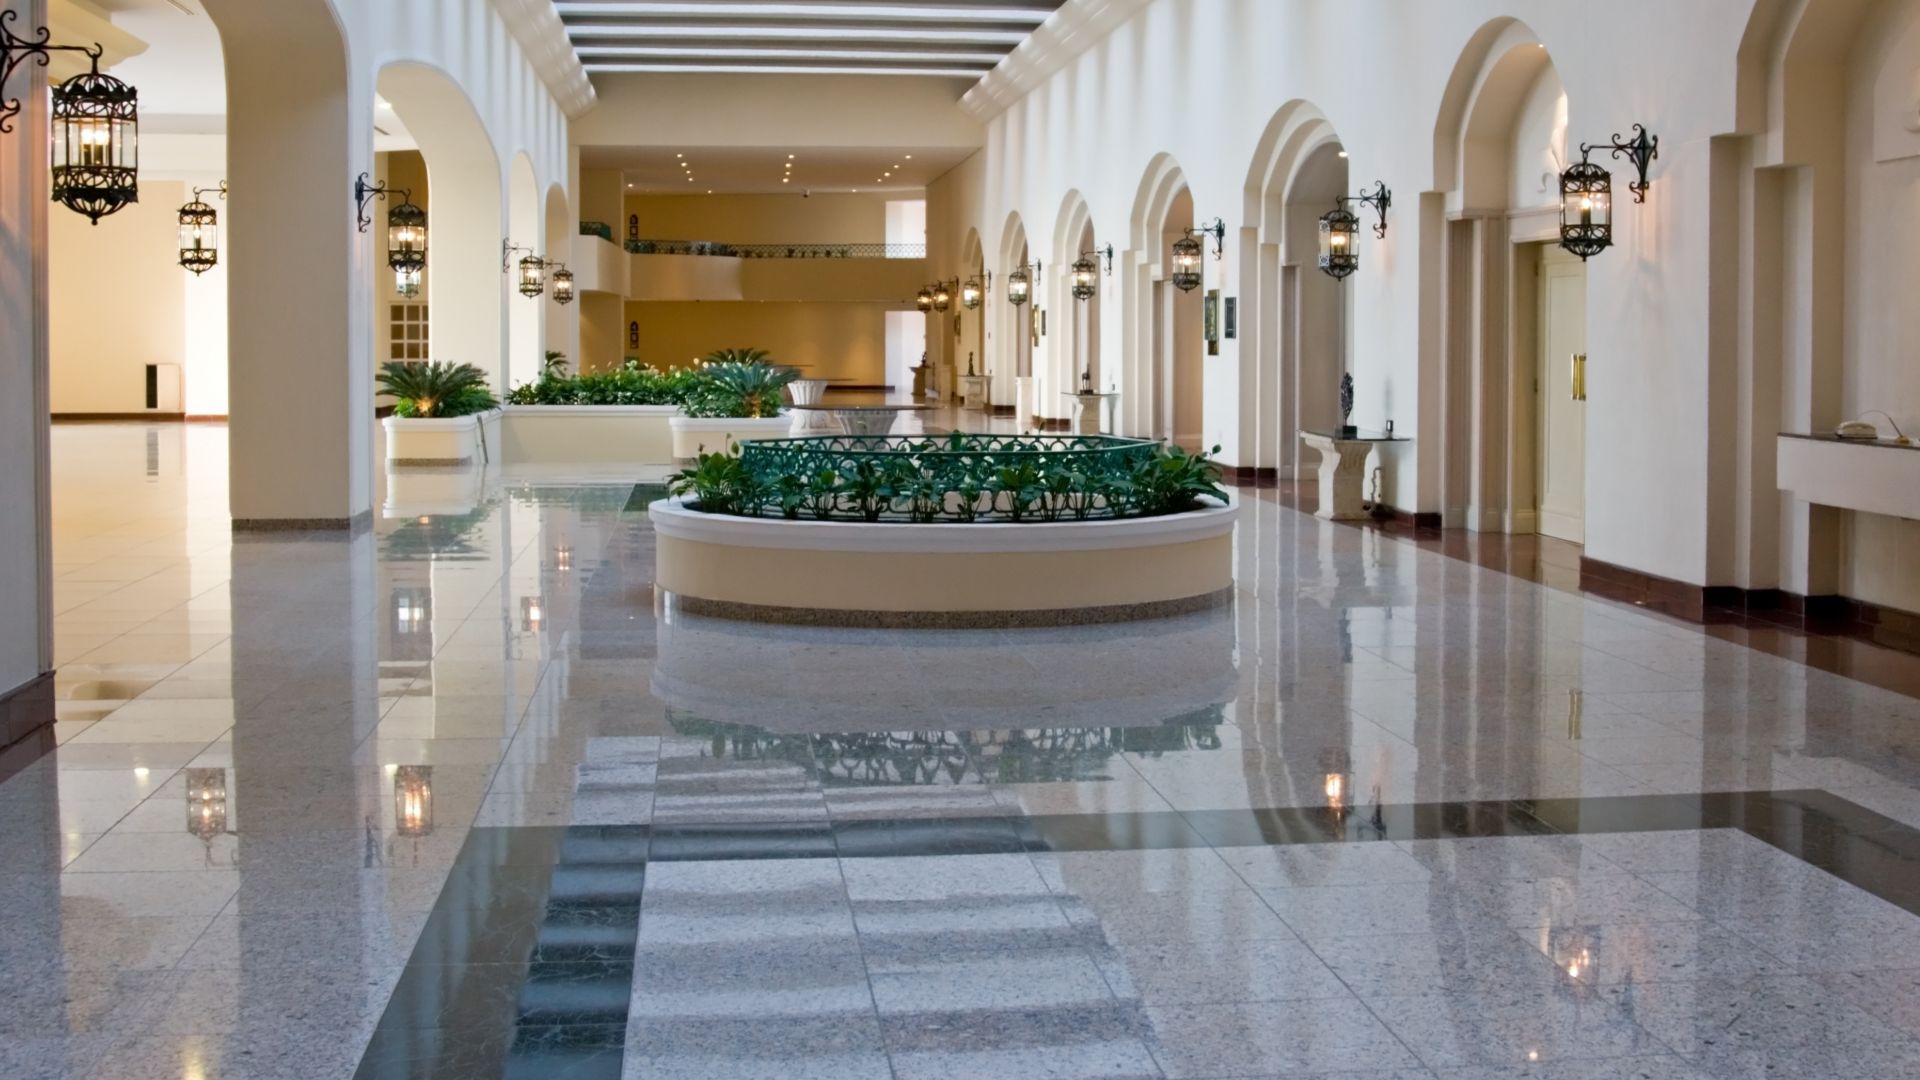 Tiles in hotel lobby area